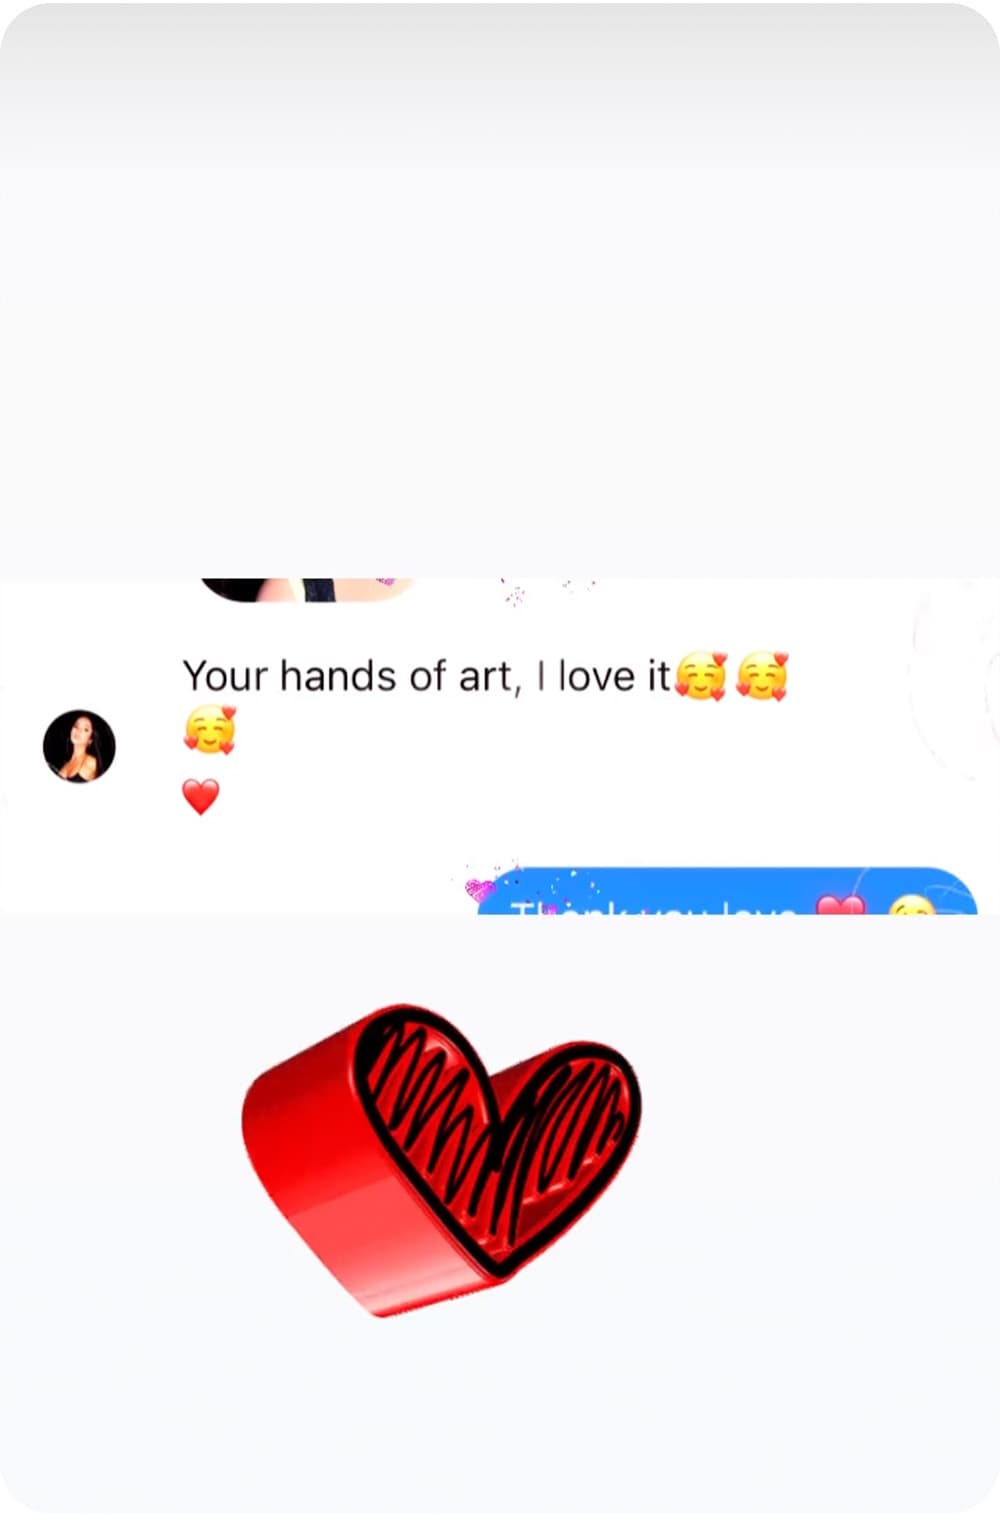 your hands of art, i love it